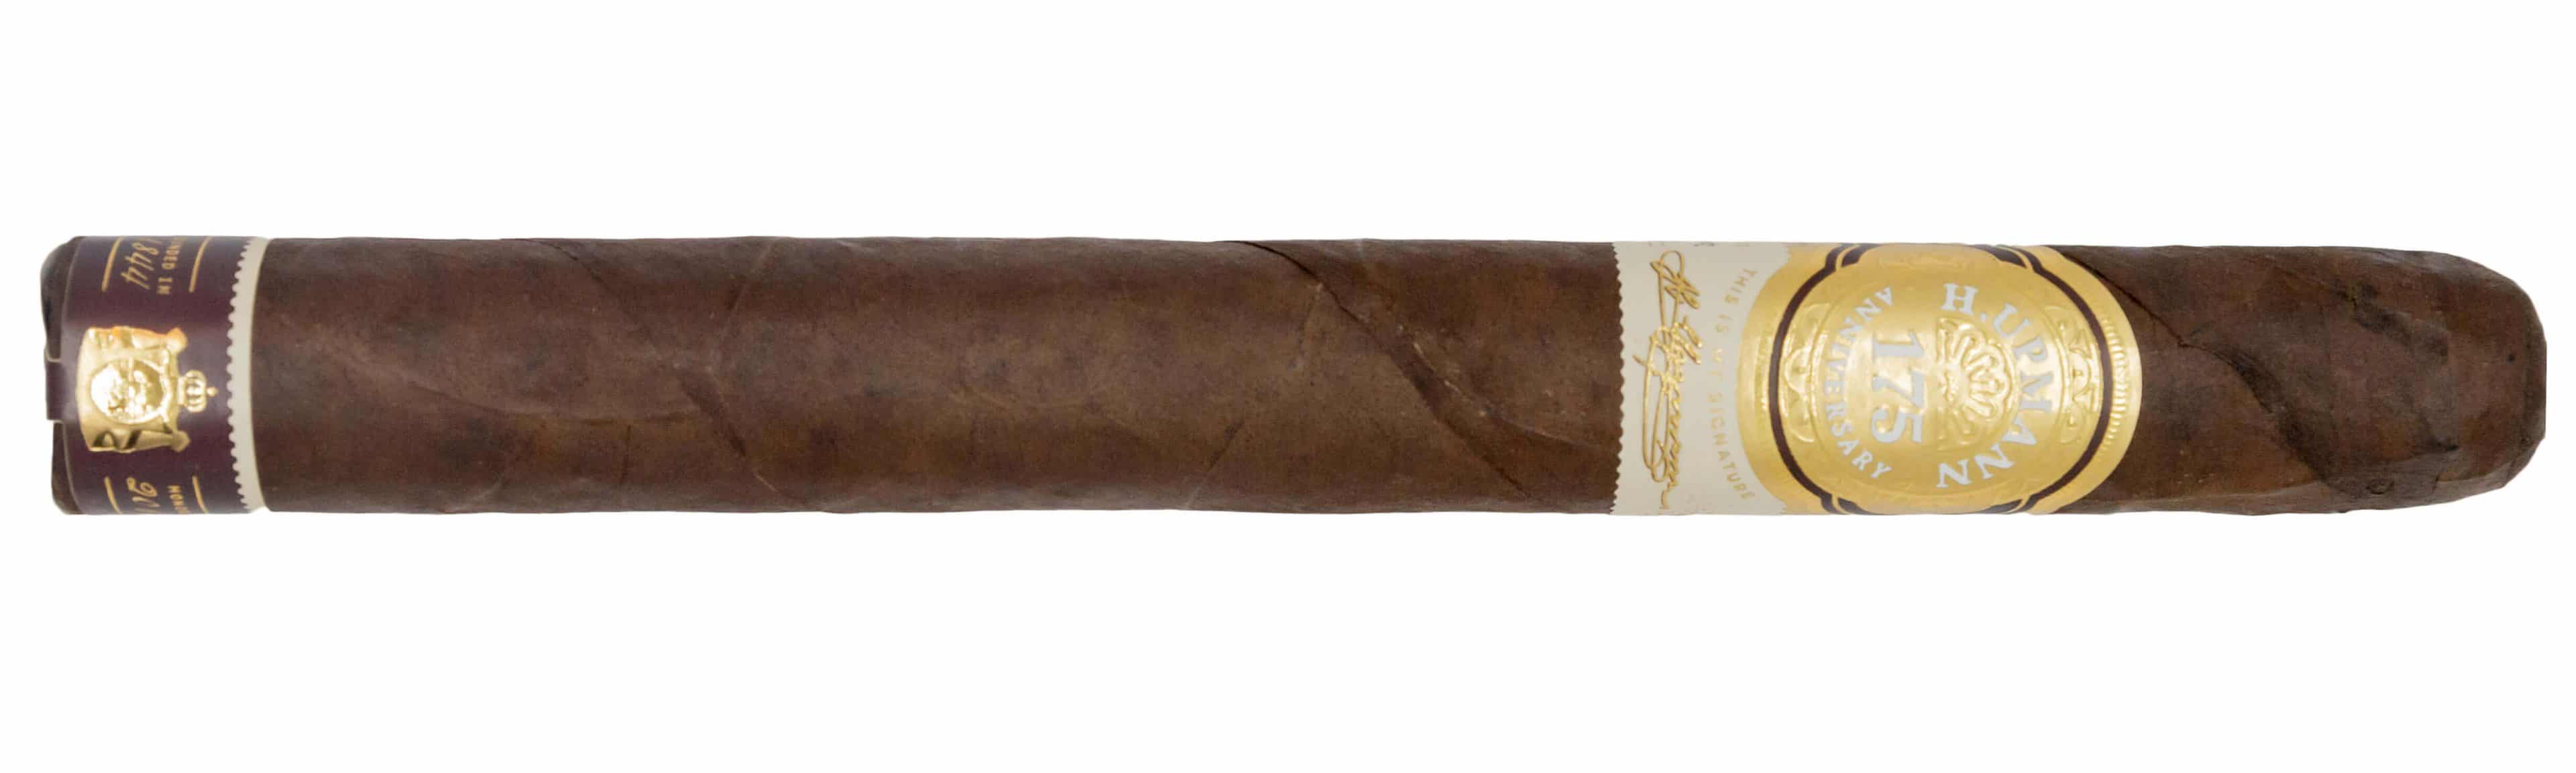 Quick Cigar Review: H. Upmann | 175th Anniversary